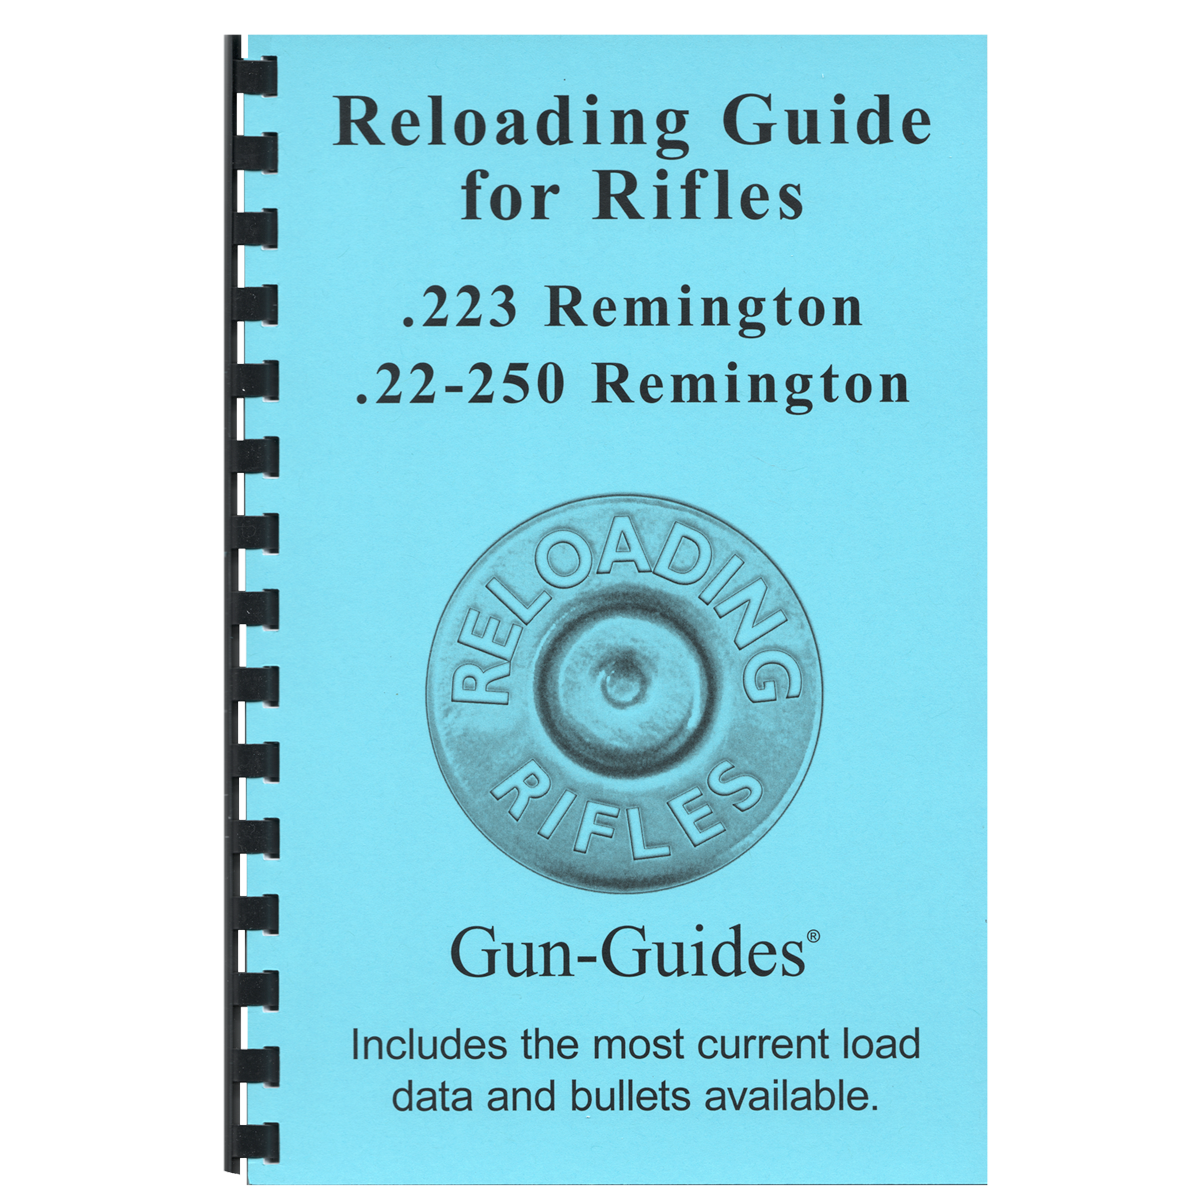 Reloading Guide Rifles - .223 Remington and 22-250 Remington - NEW 2017 Gun-Guides®